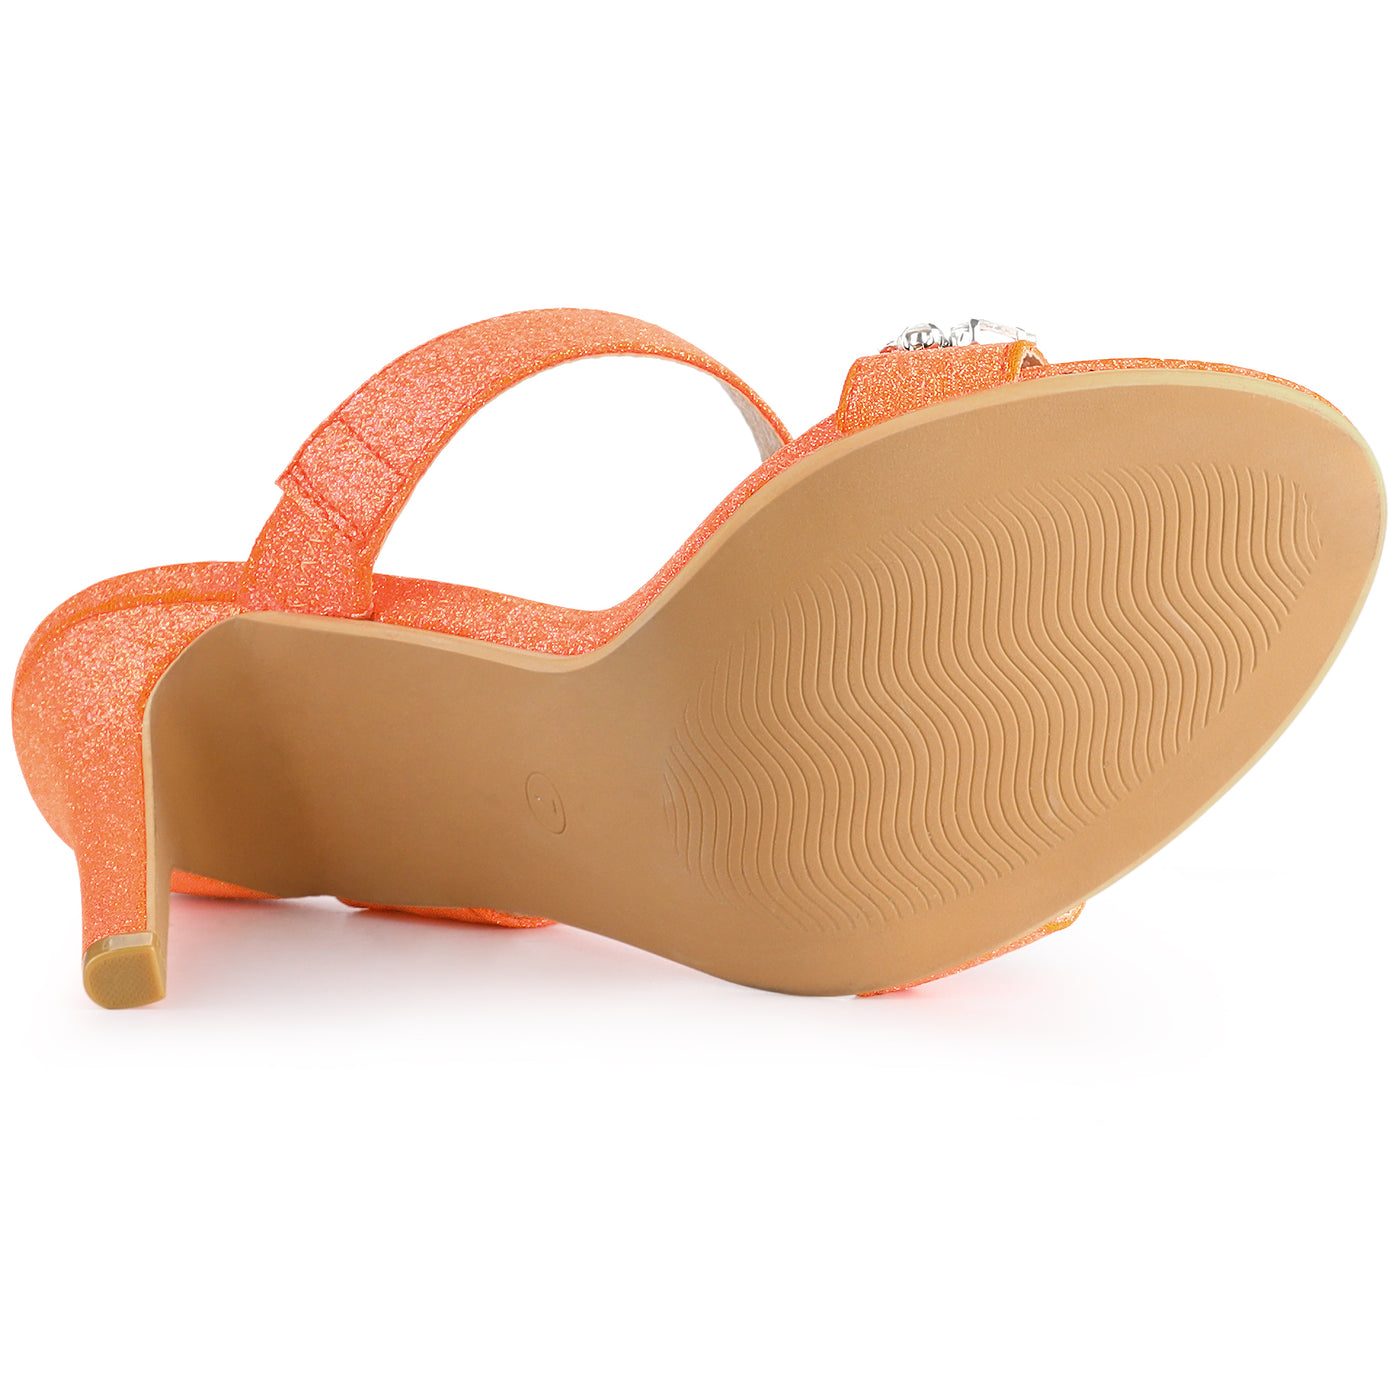 Allegra K Open Toe Glitter Rhinestone Decor Stiletto Heel Sandals